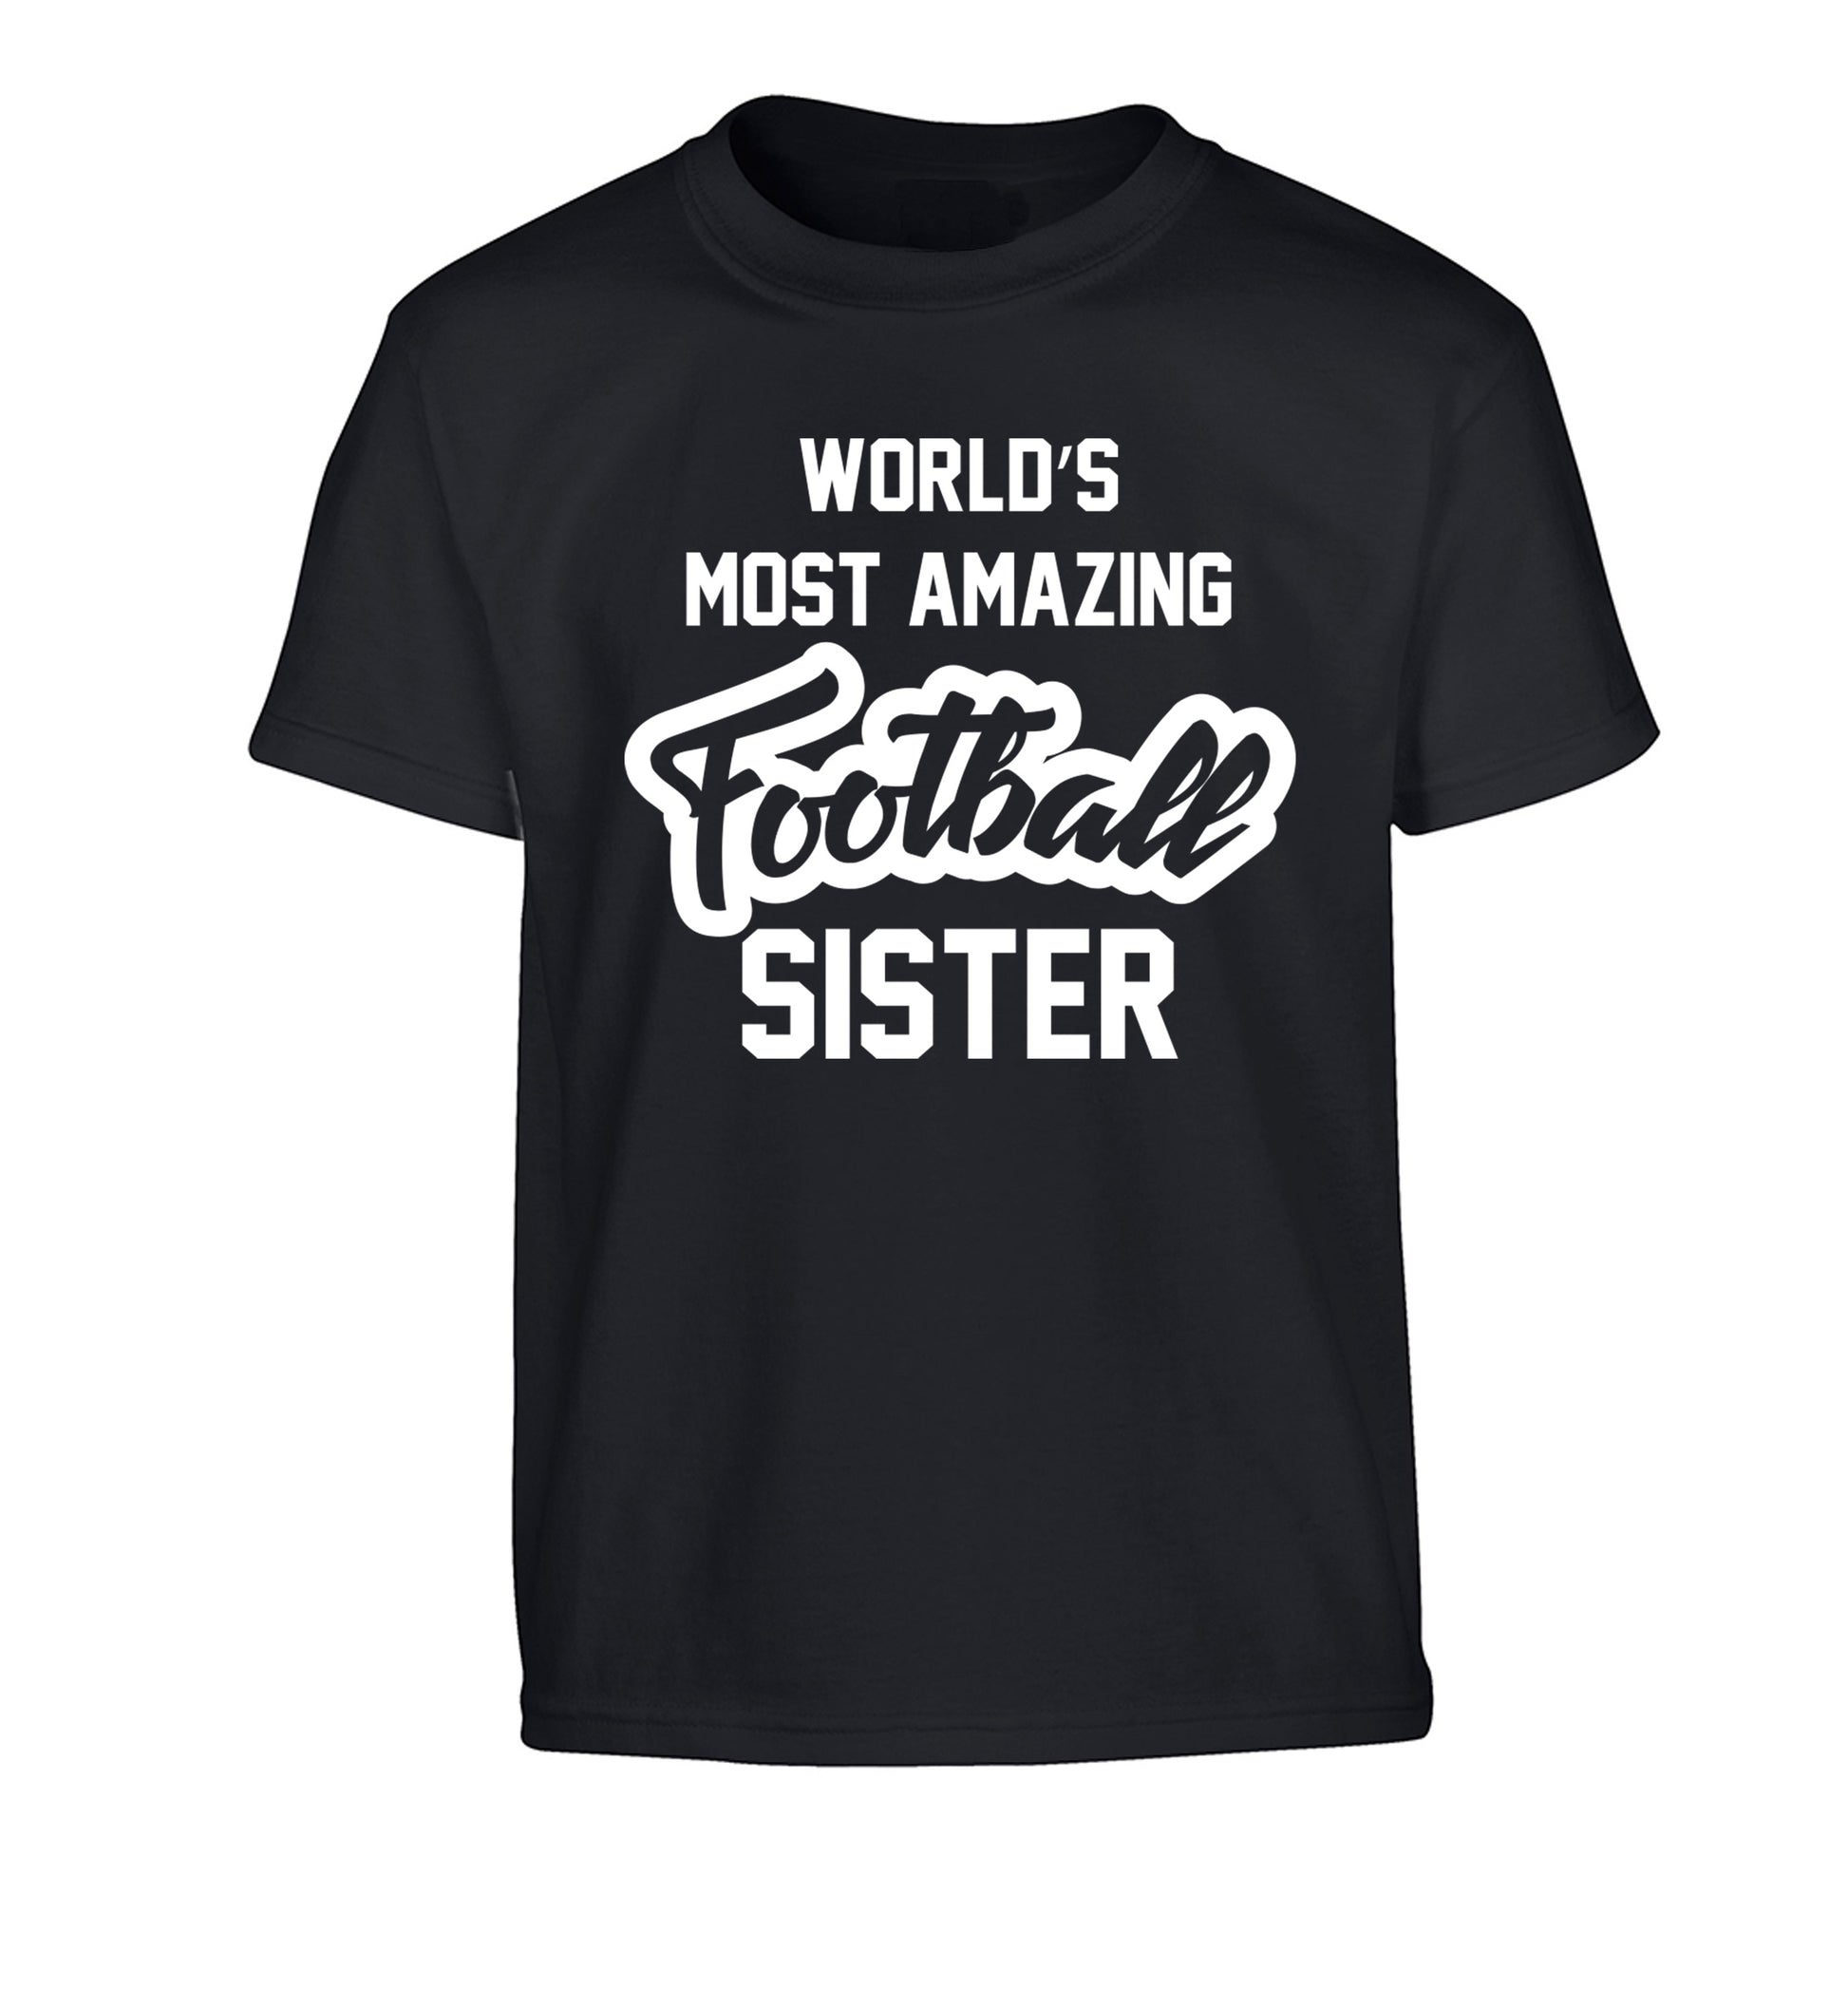 Worlds most amazing football sister Children's black Tshirt 12-14 Years